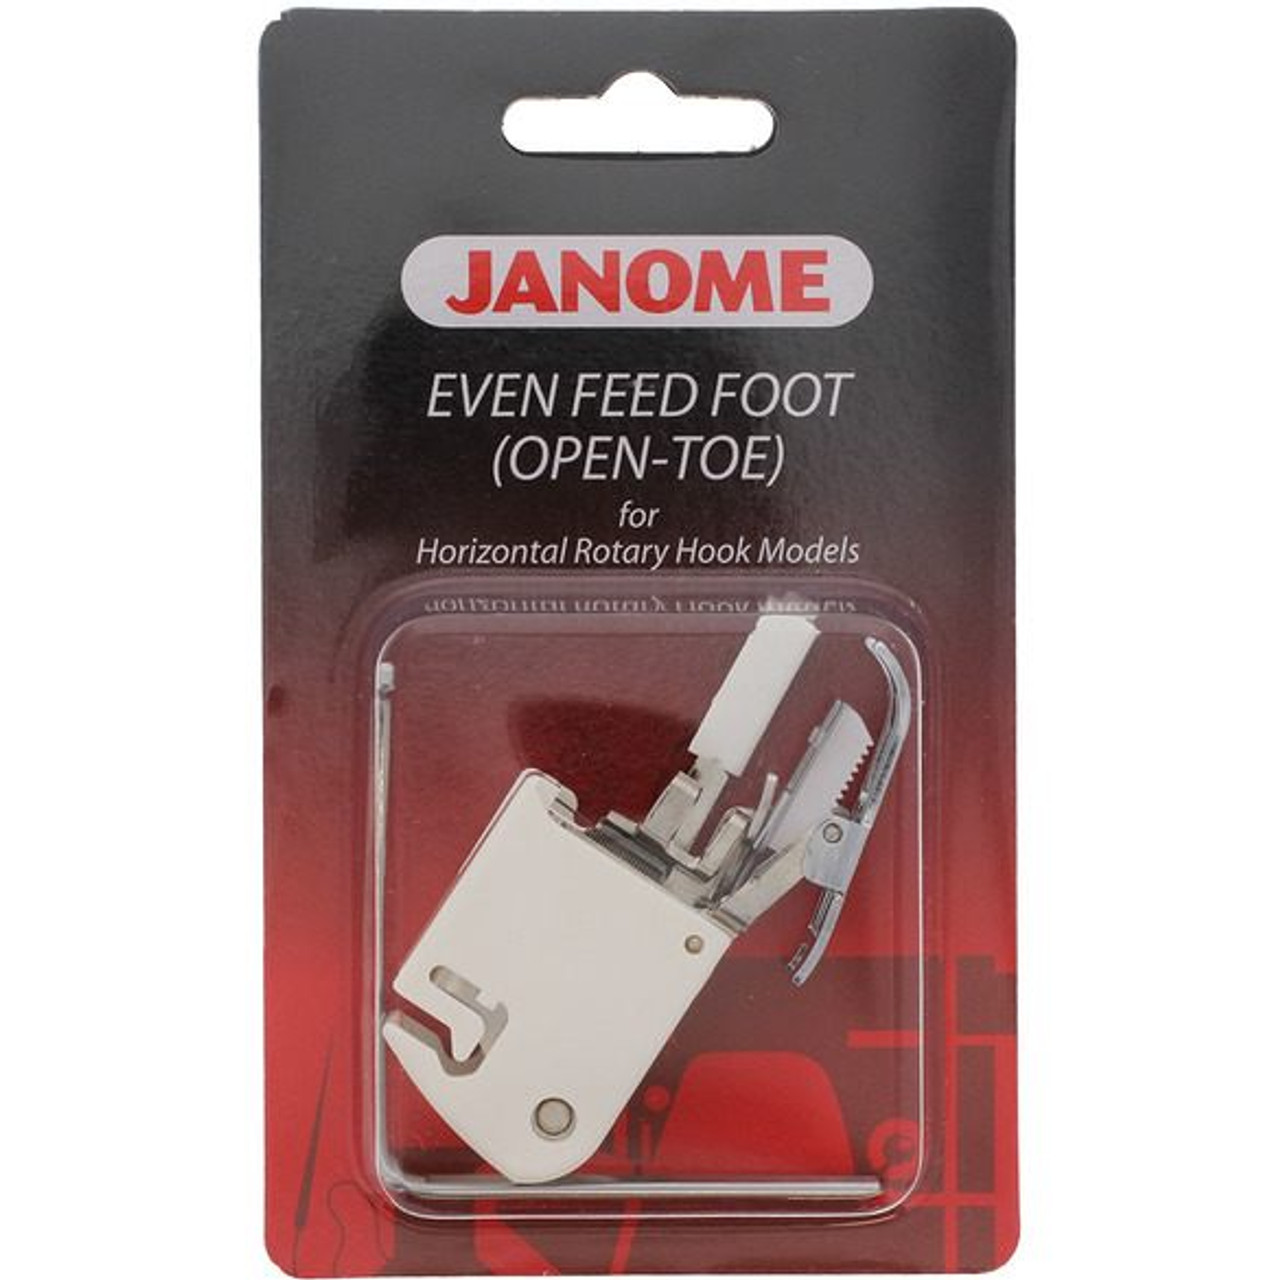 Open toe Janome Even Feed Foot Horizontal Rotary Hook Models 